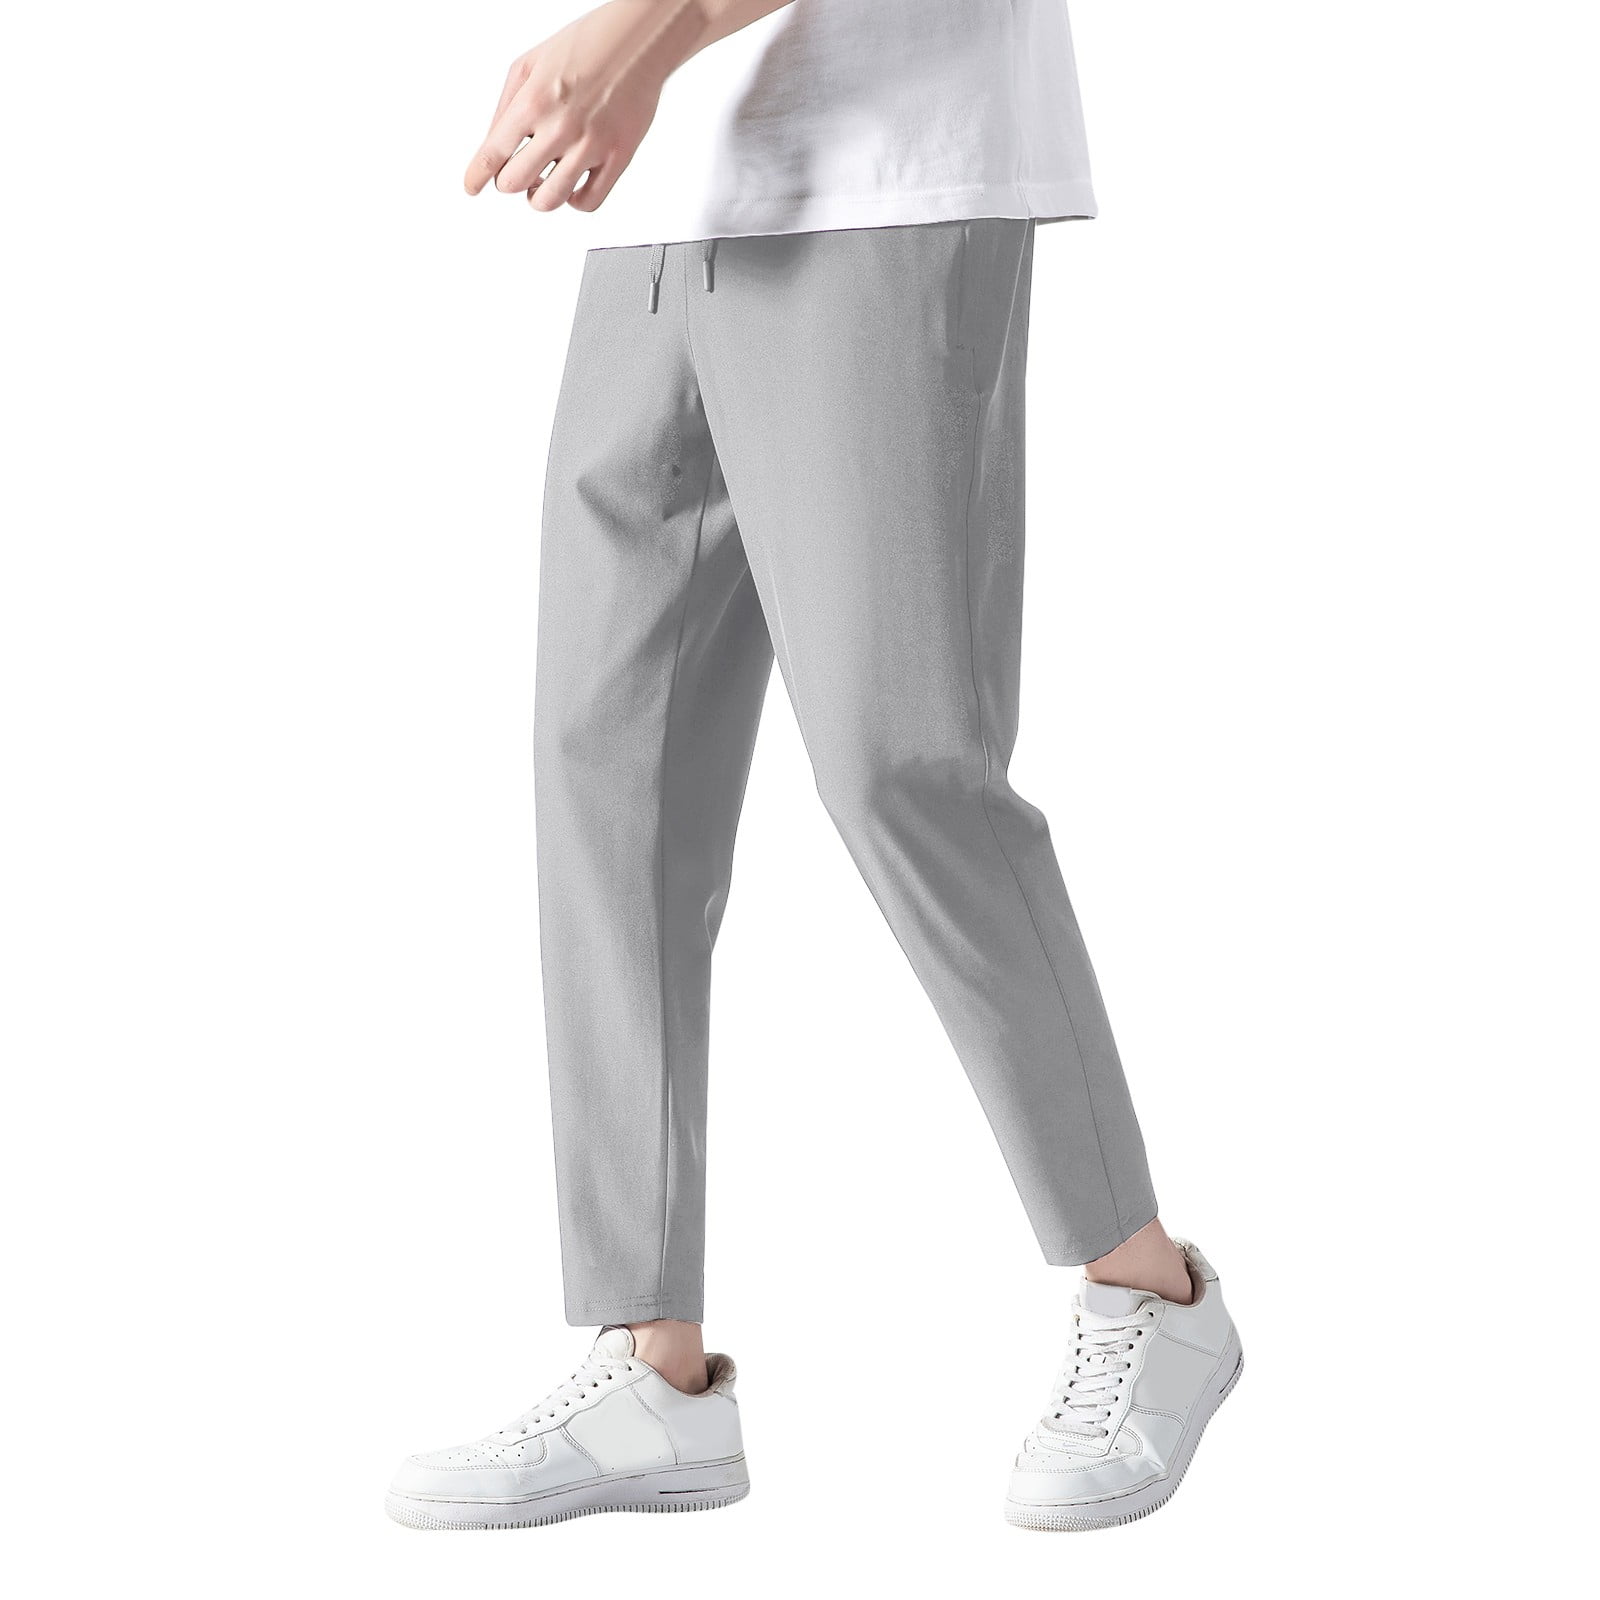 VBXOAE Mens Sweatpants Ice Silk Pants Fitness Running Stretch Yoga Pant  Soft Fitness Jogging Pants 